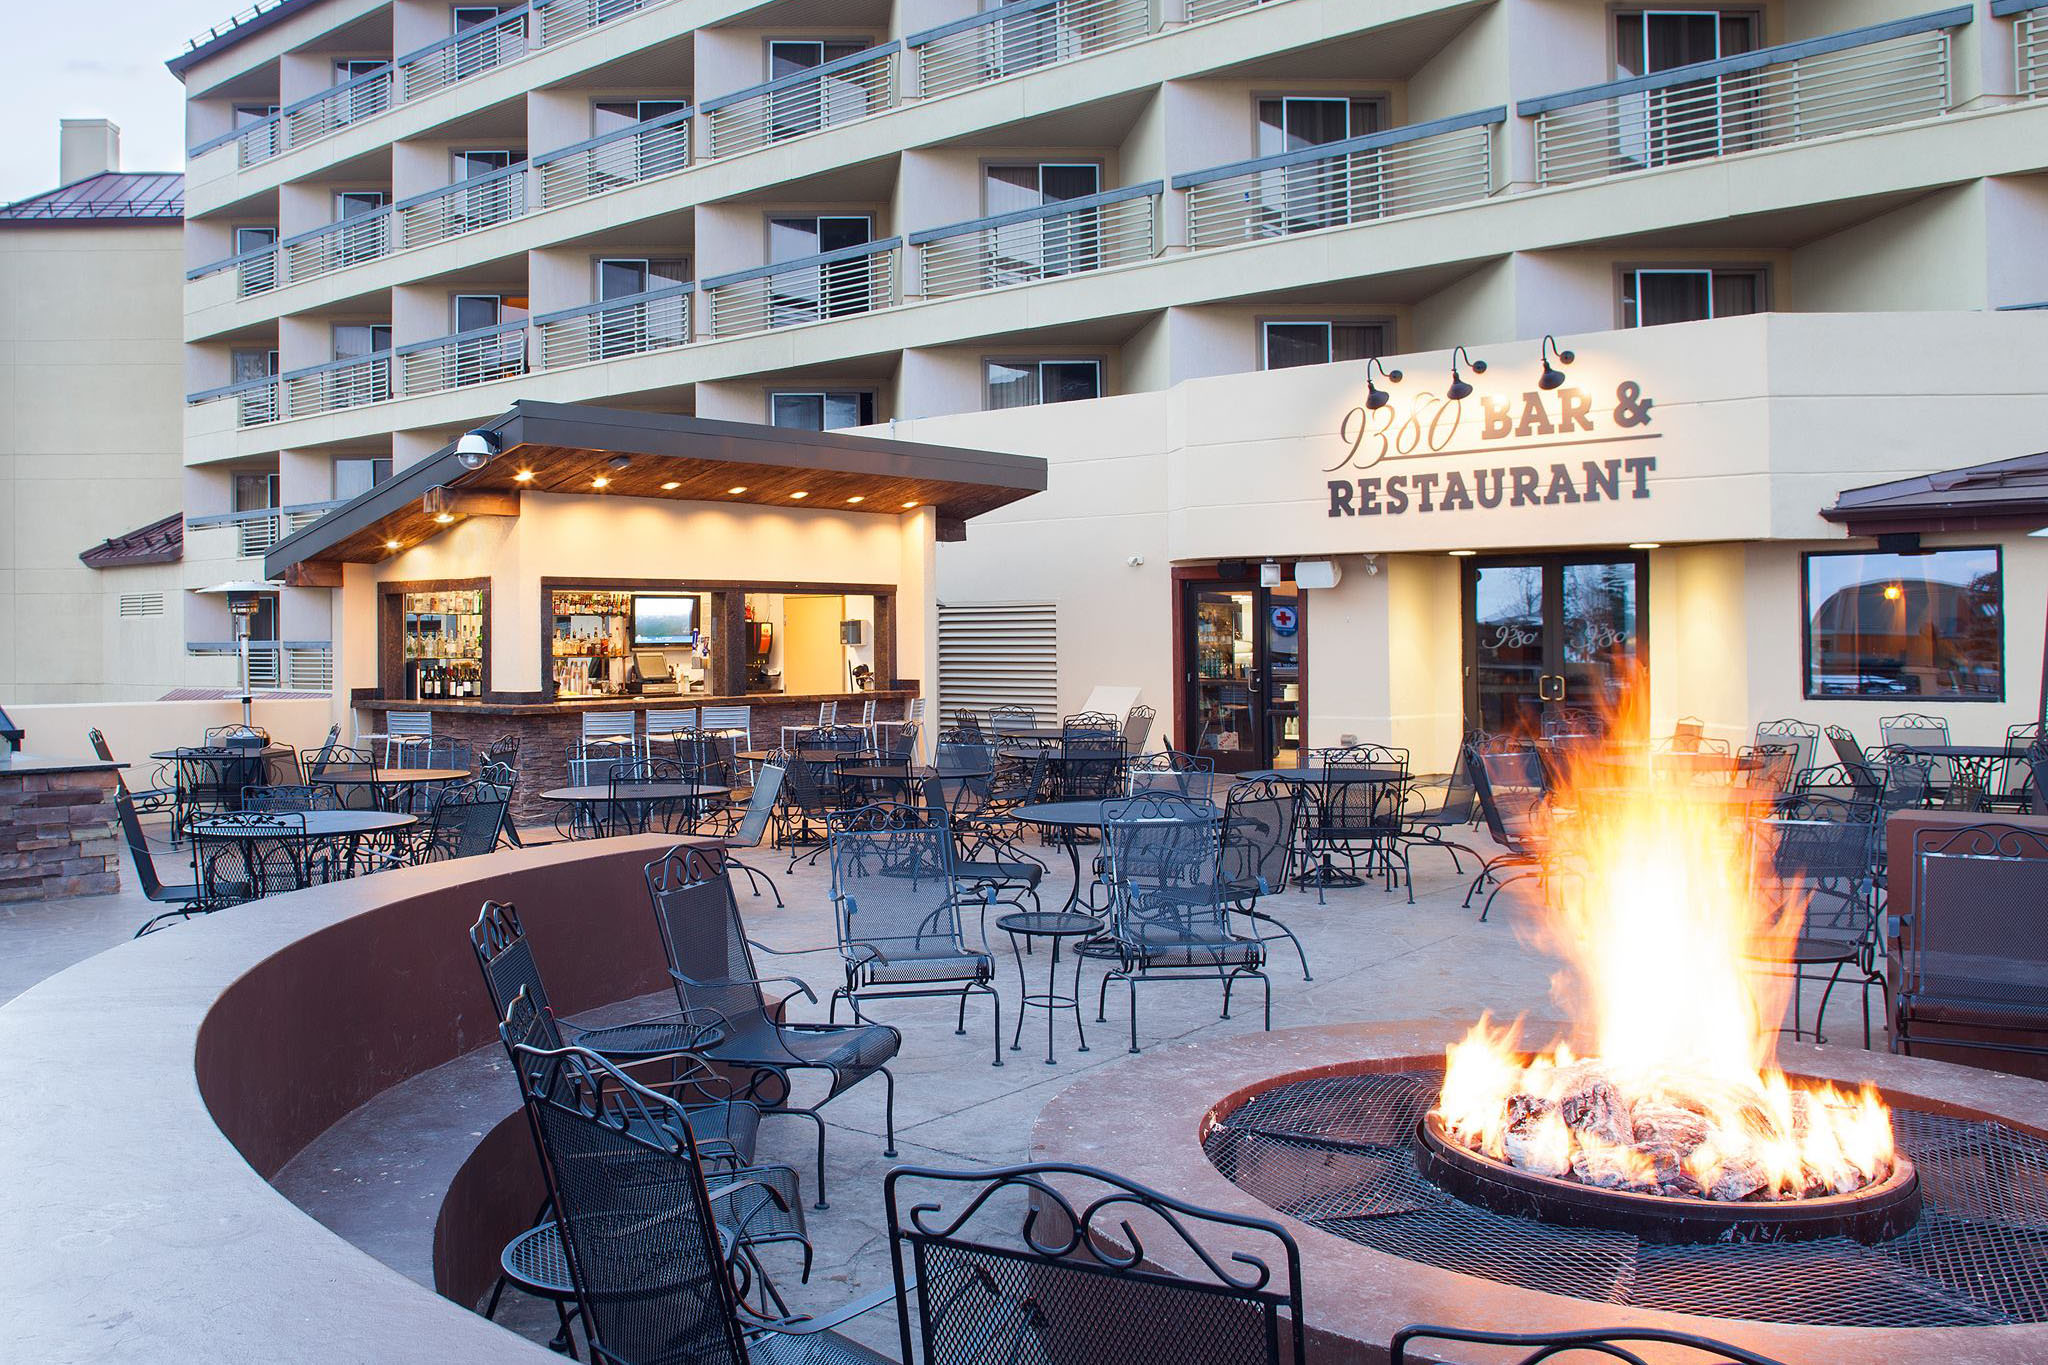 9380 Tavern Restaurant & Bar - Mount Crested Butte Colorado